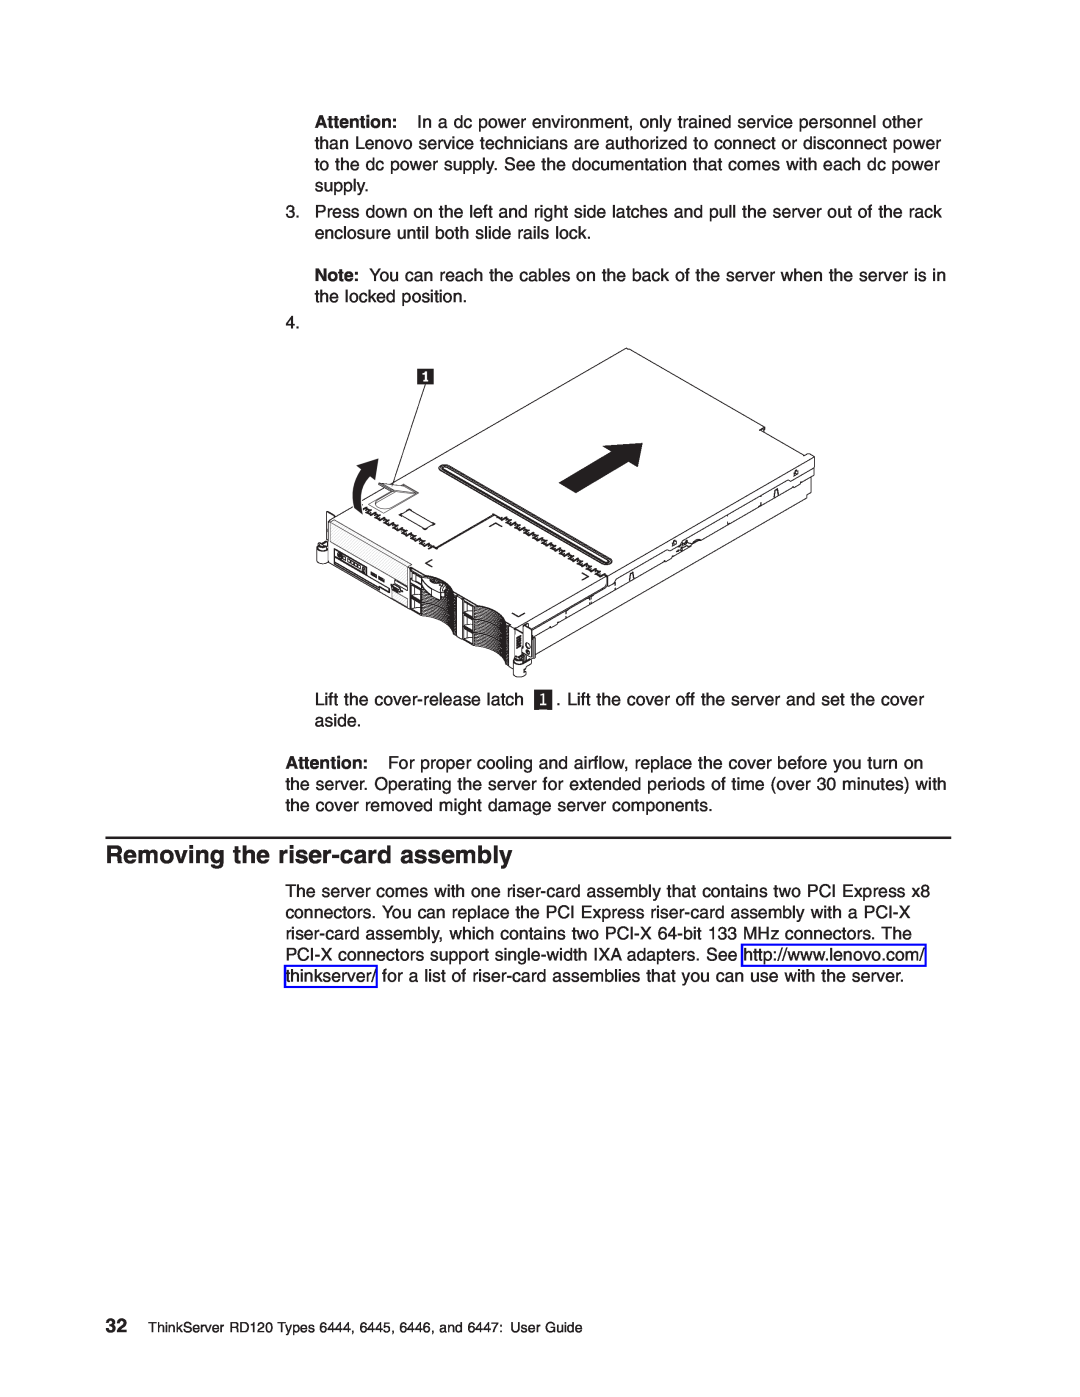 Lenovo RD120 manual Removing the riser-cardassembly 